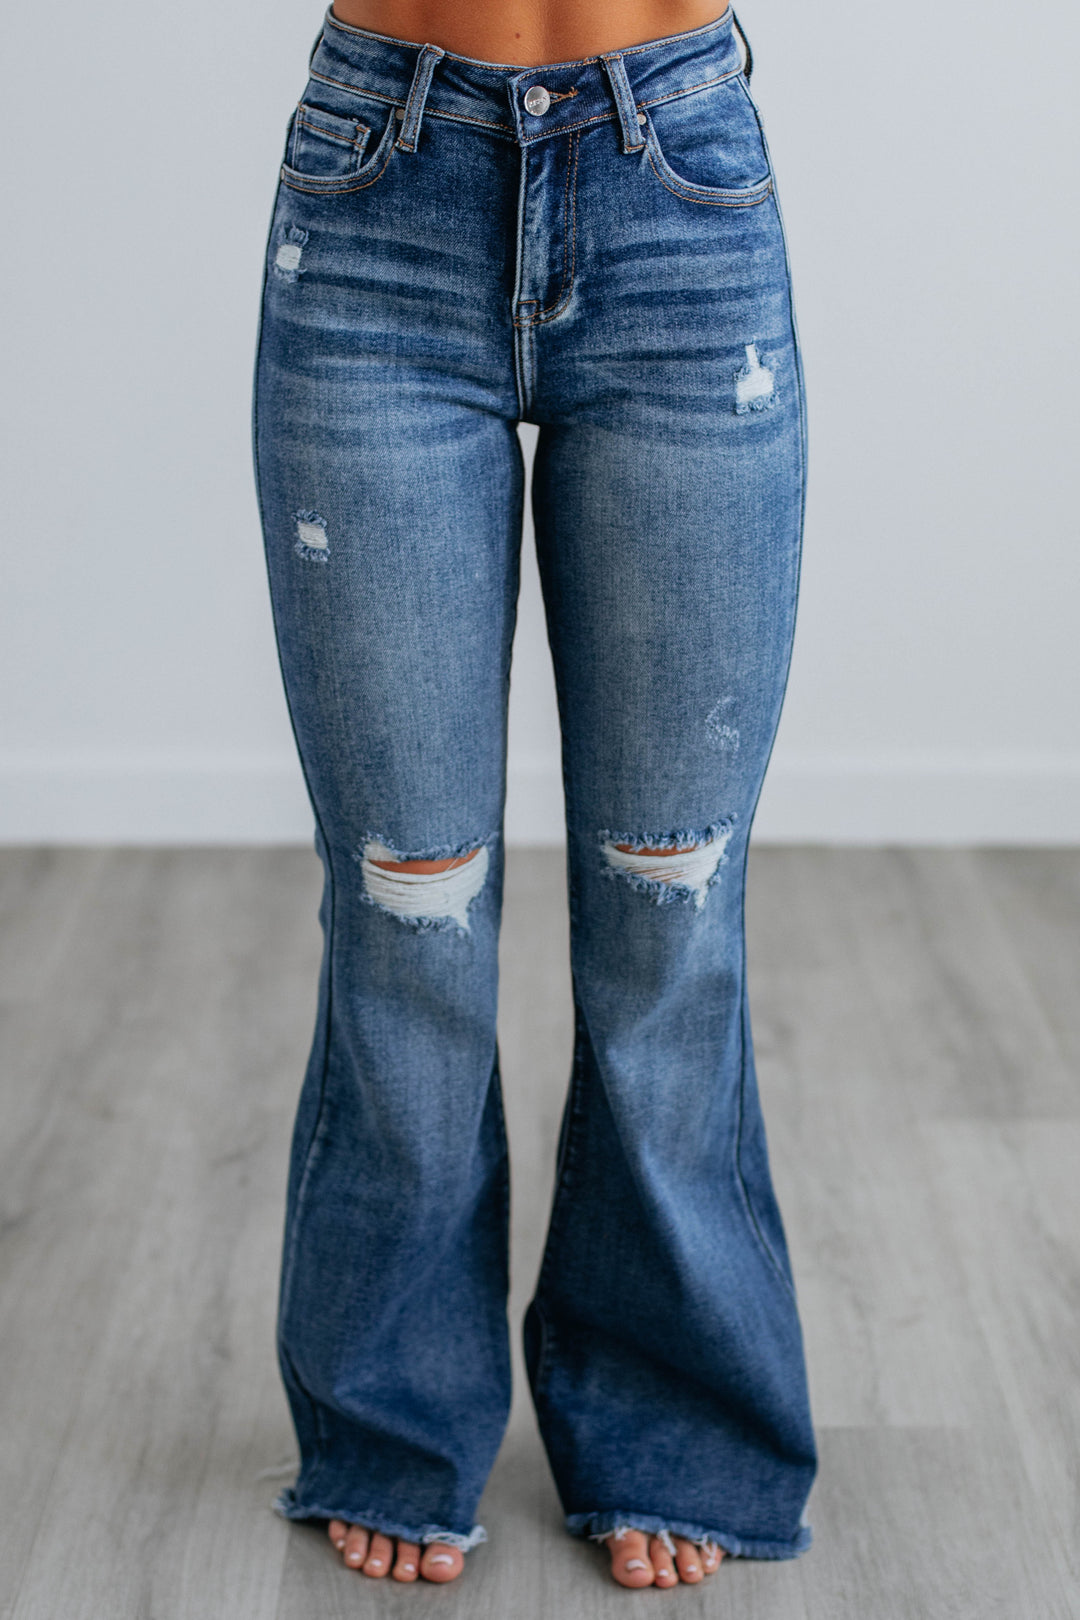 Journee Risen Flare Jeans